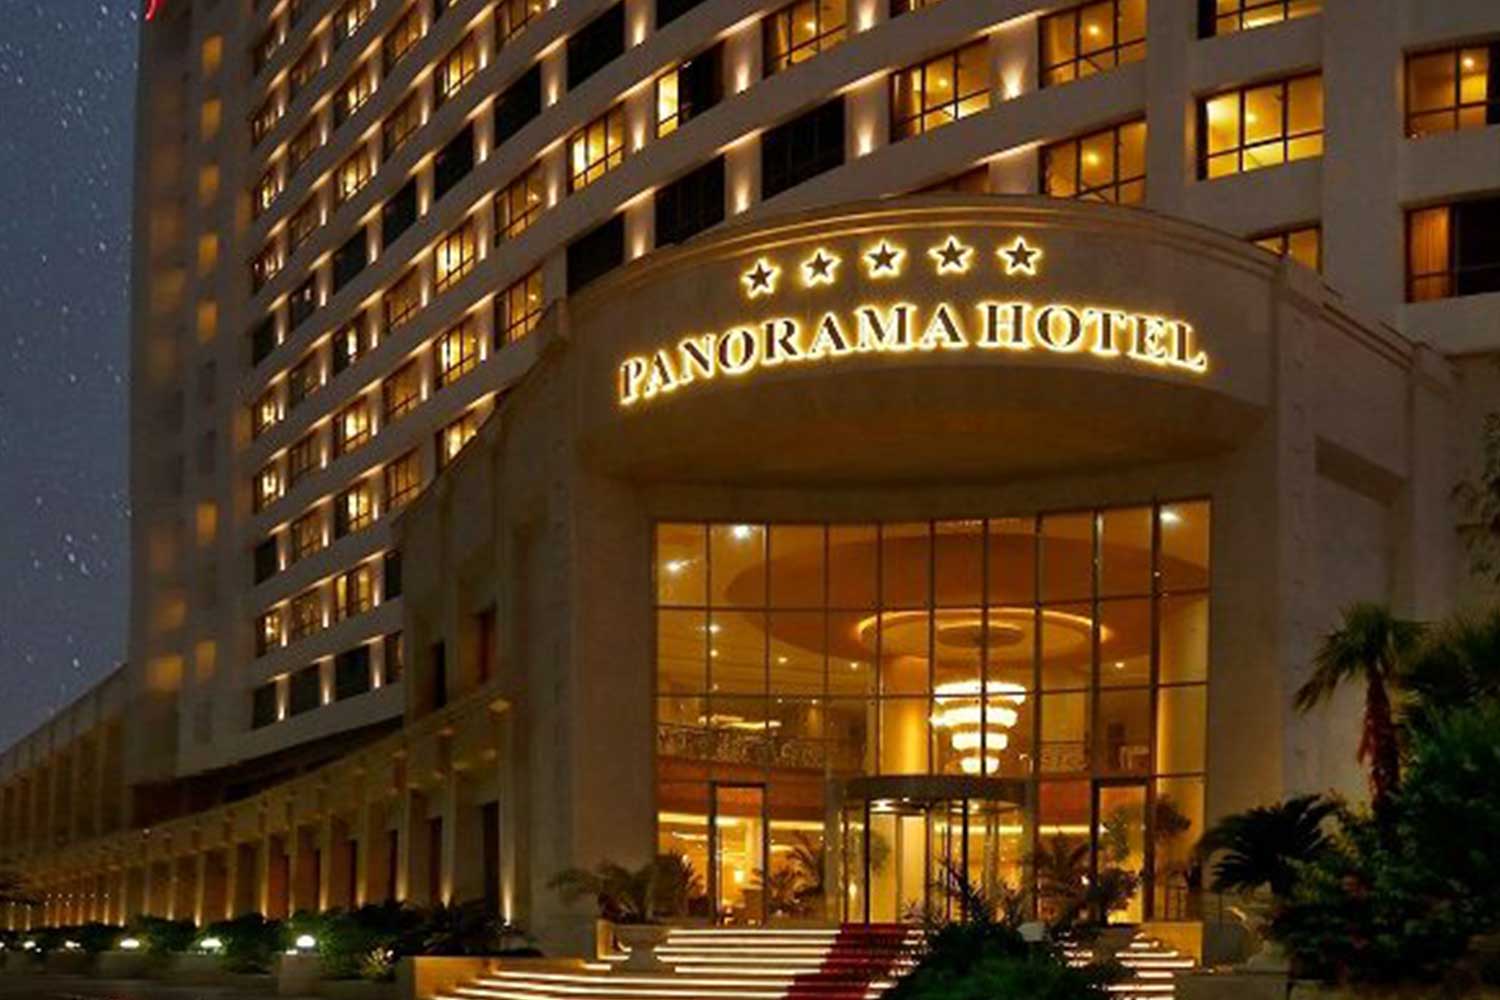 5tgyv6bu76uin68i معرفی هتل پانوراما کیش   هتلی لوکس در جزیره مرجانی کیش